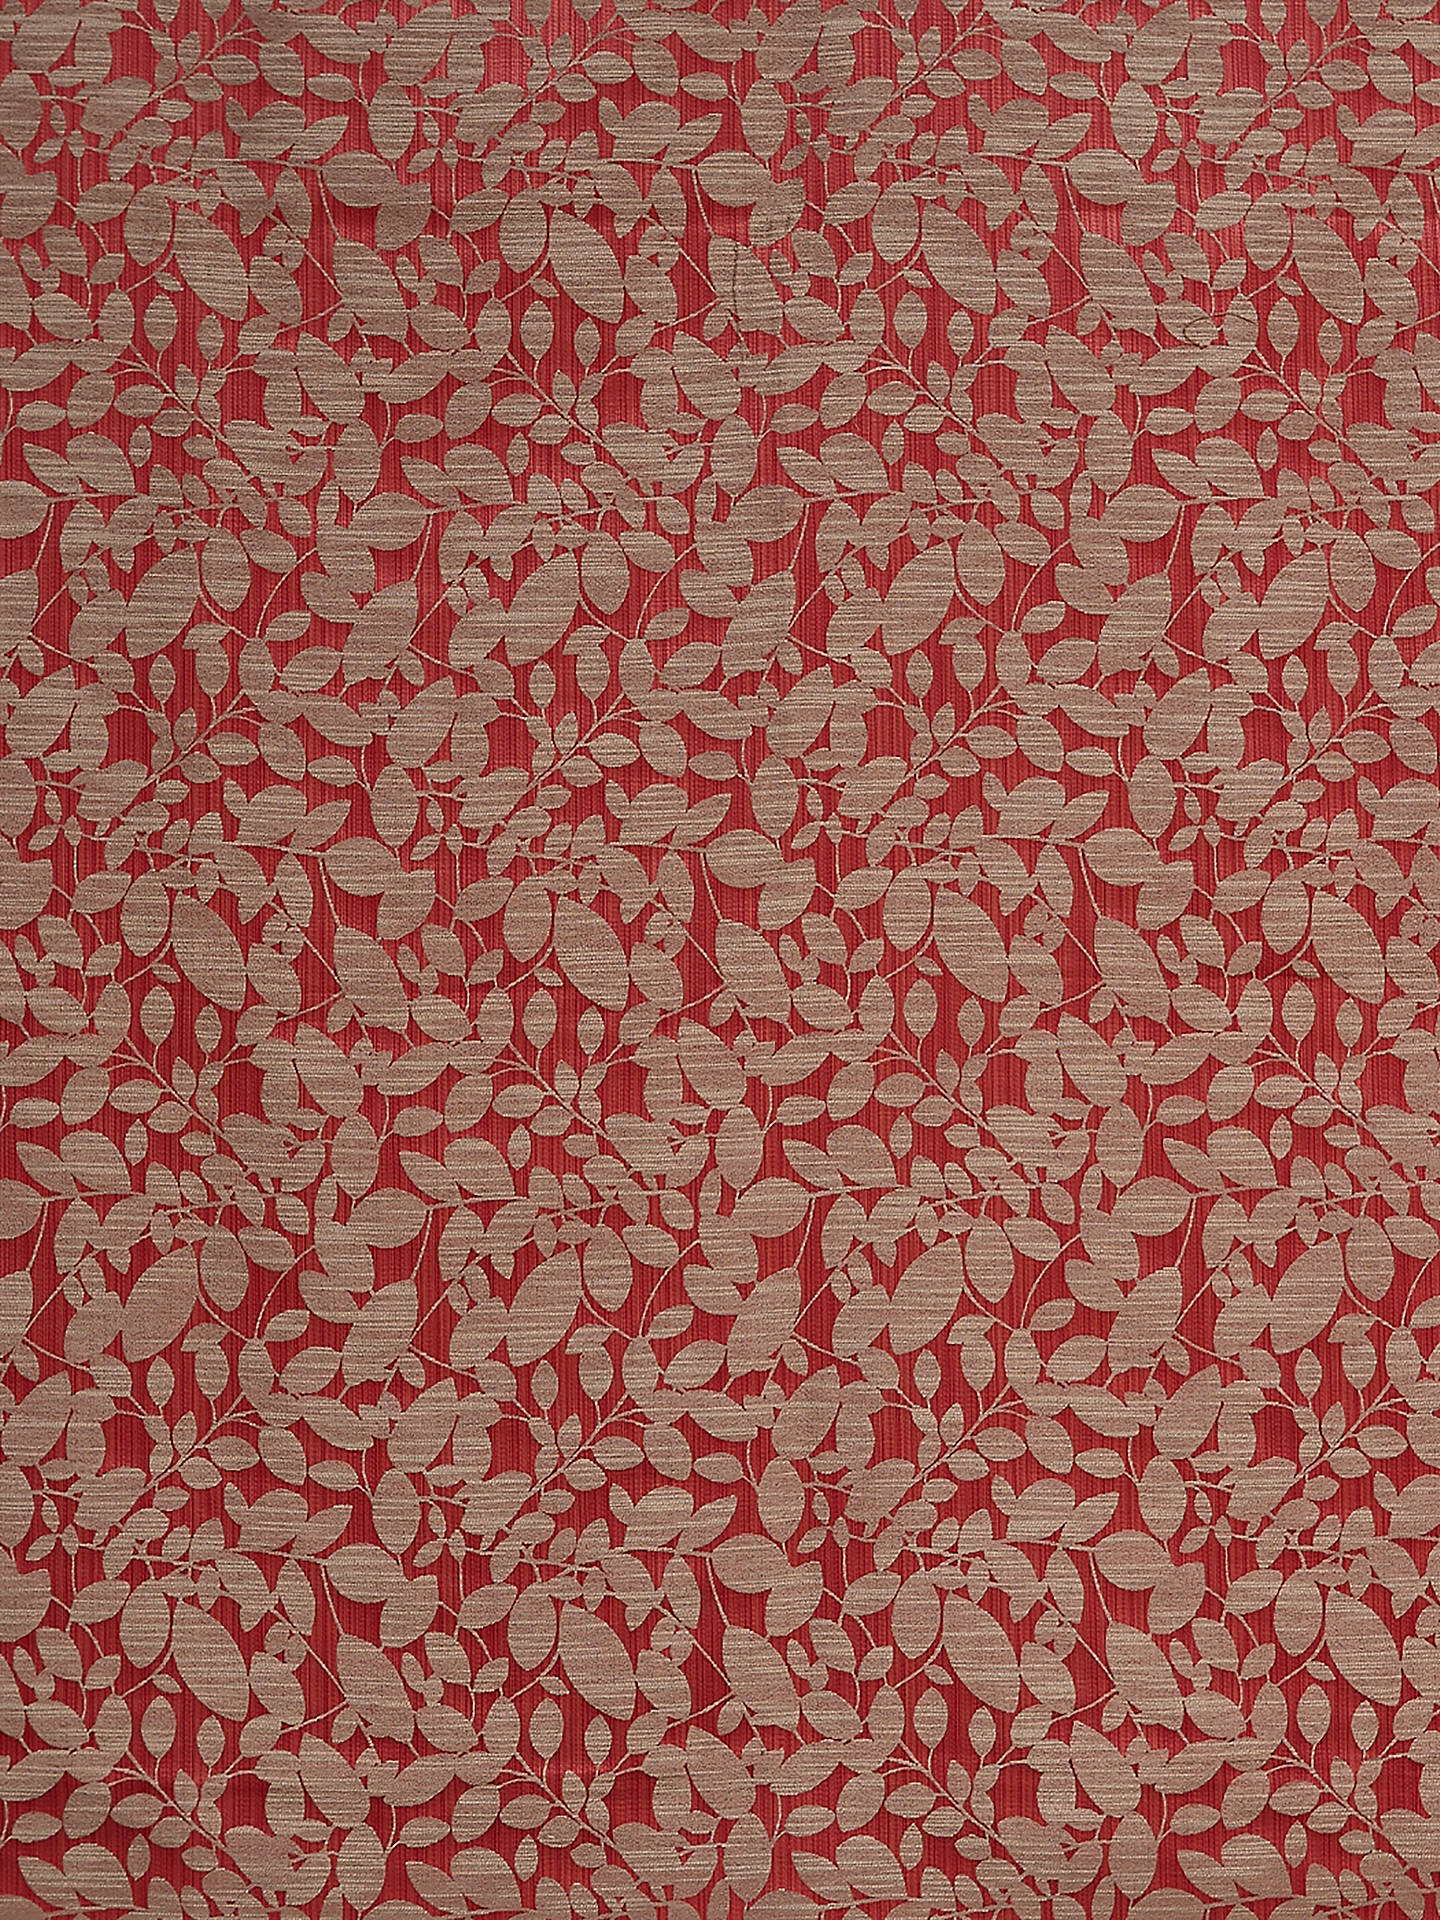 Prestigious Textiles Jude Made to Measure Curtains, Cranberry